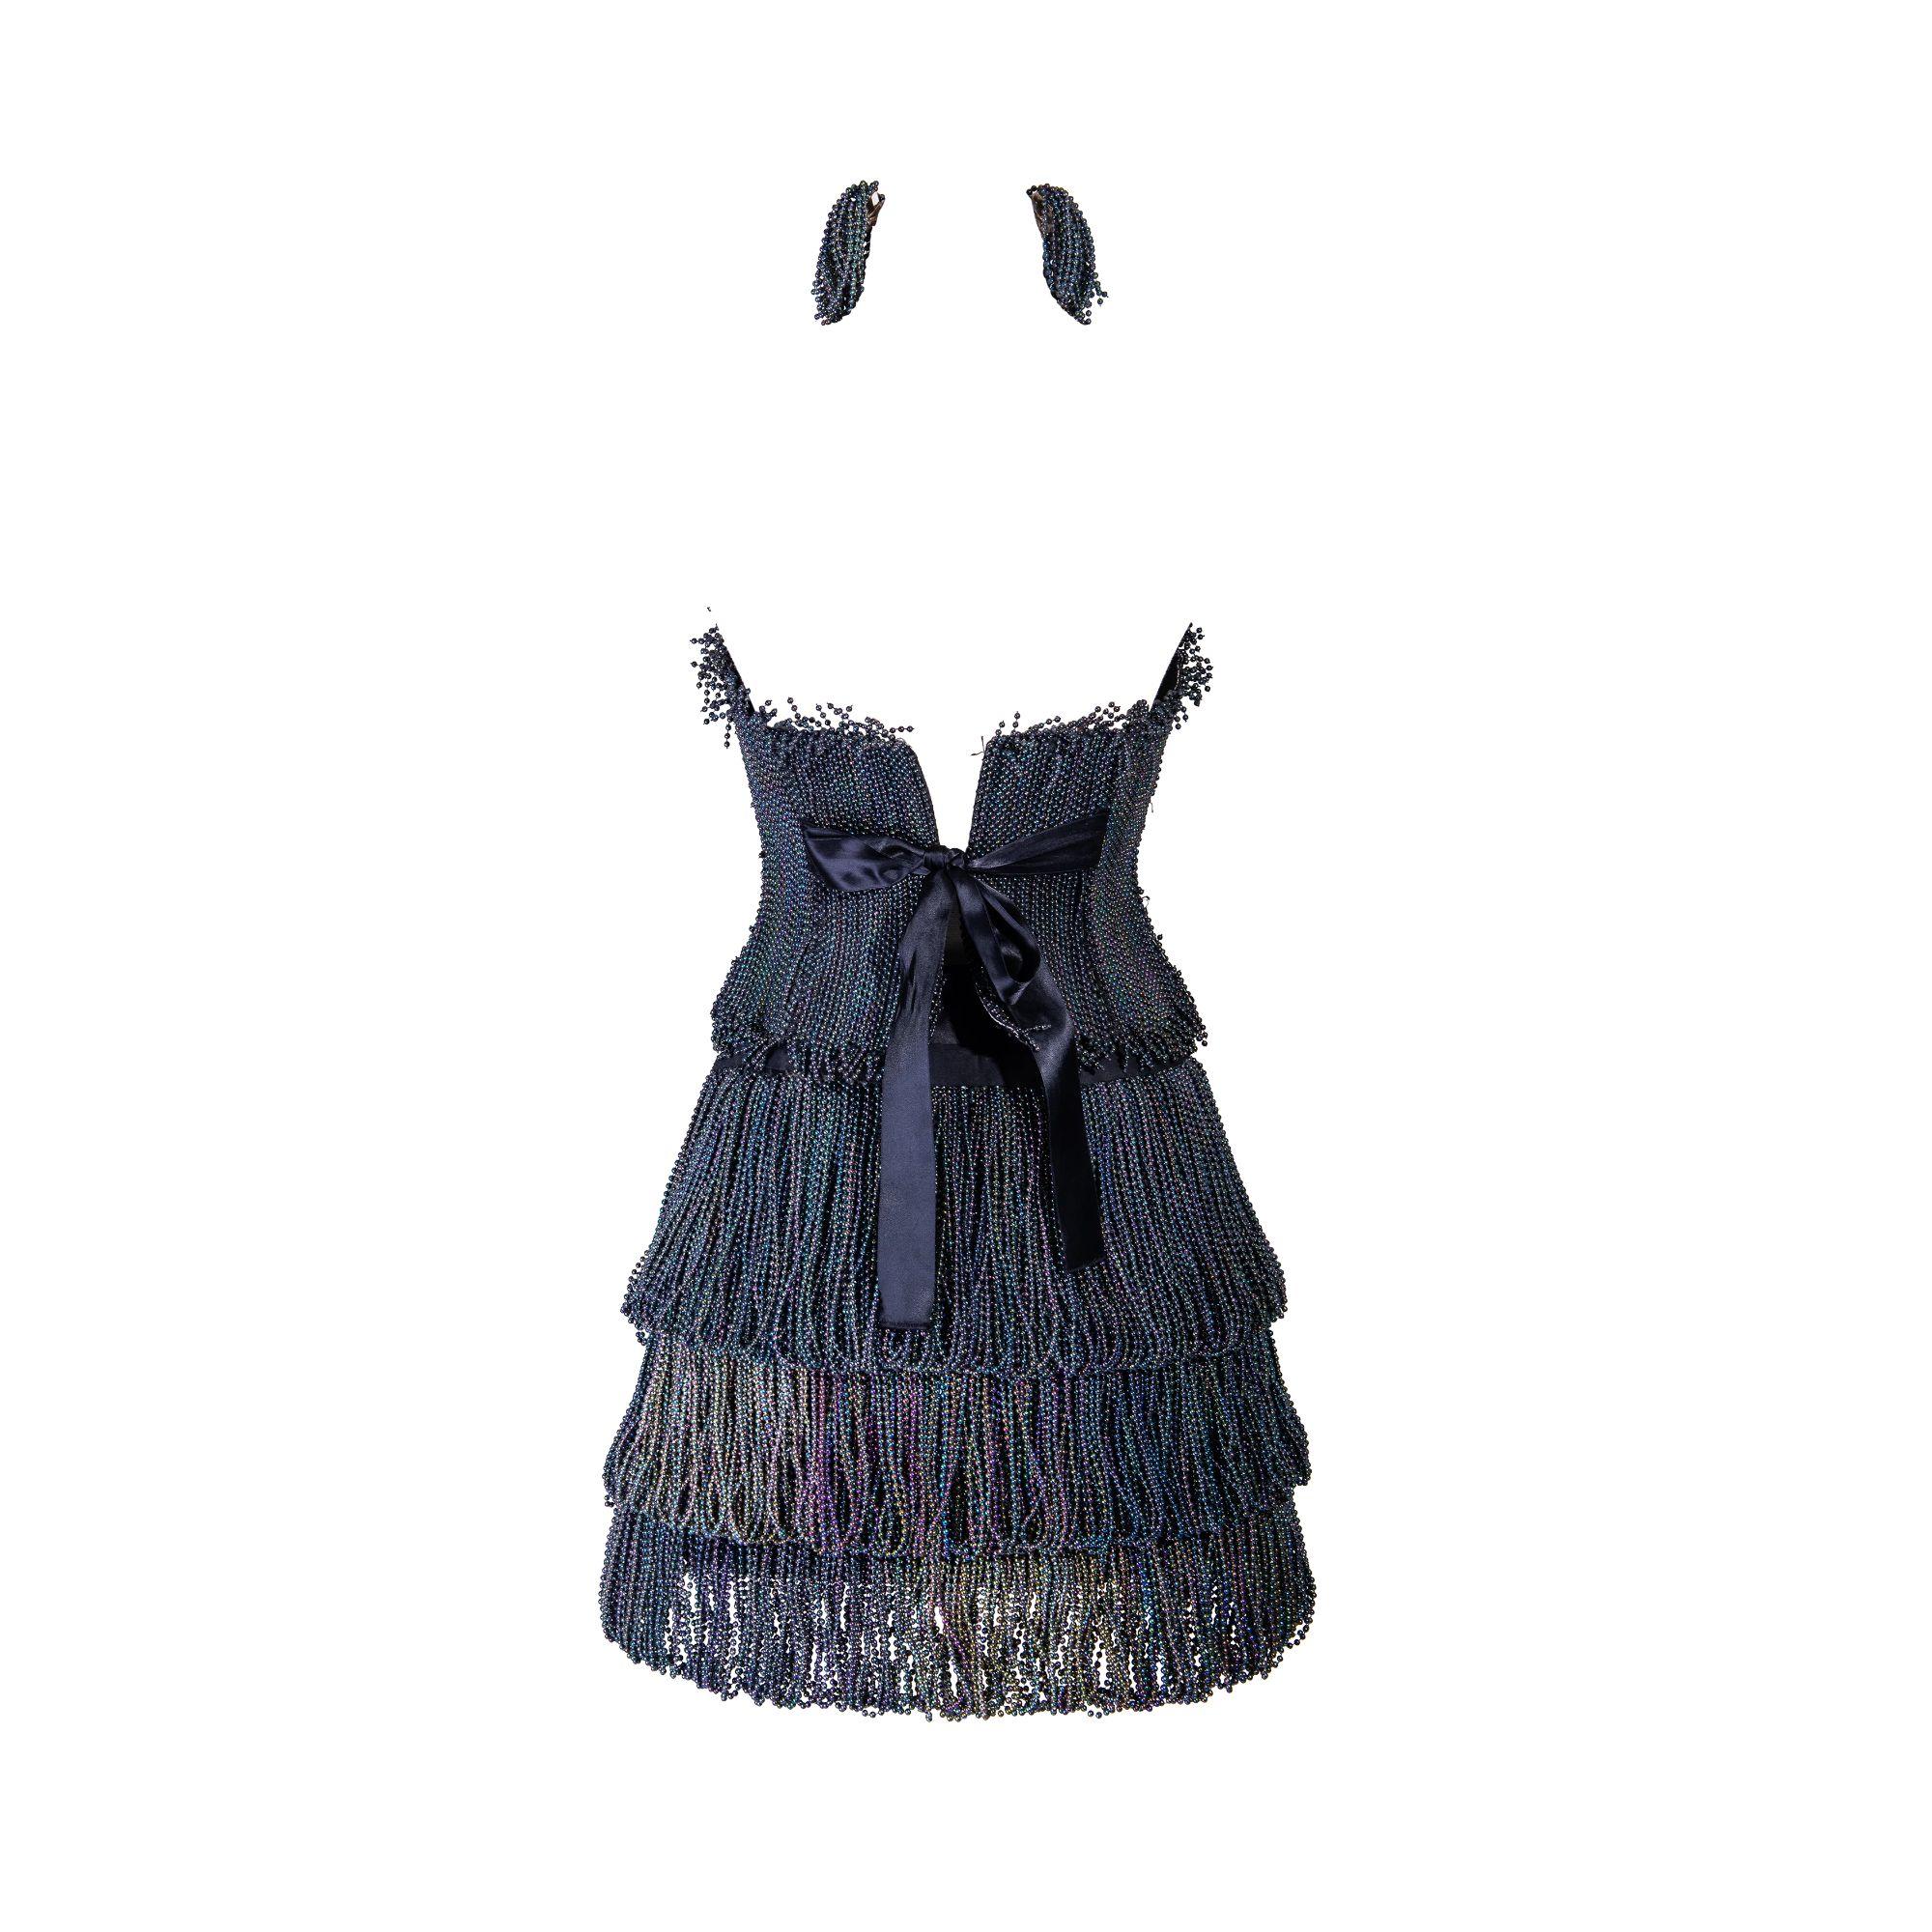 S/S 1988 Paco Rabanne Haute Couture Iridescent Beaded Set 1